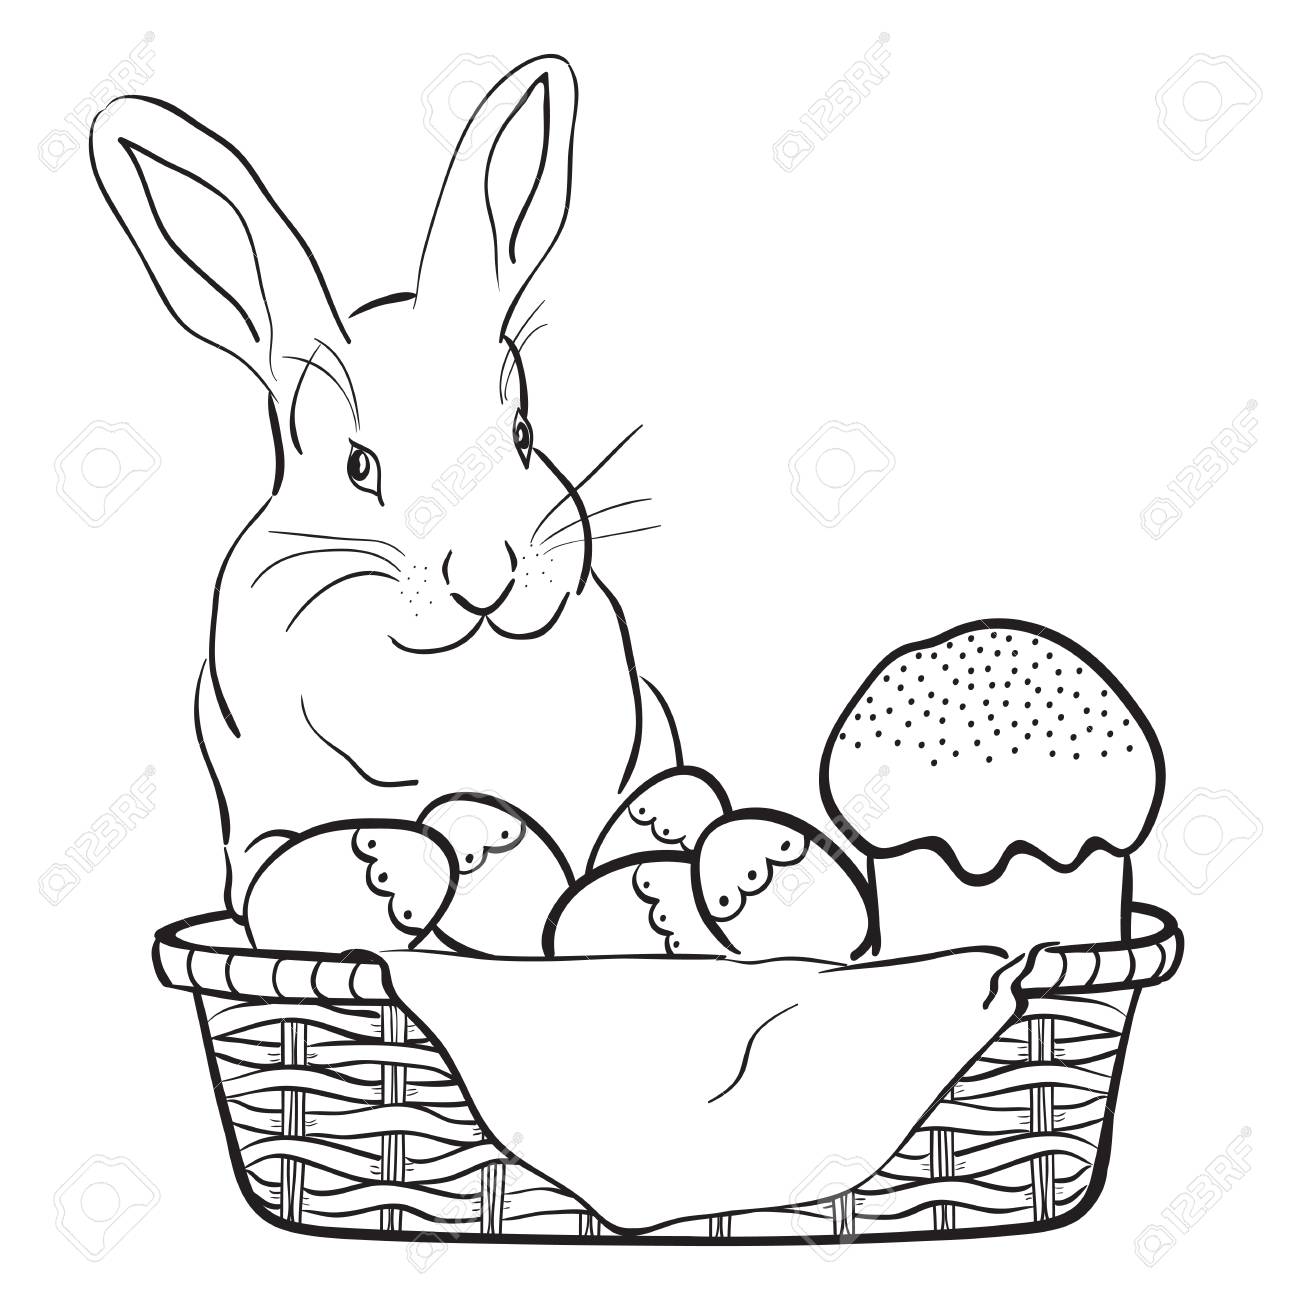 Easter rabbit, basket, eggs and cake.Black and white vector illustration..